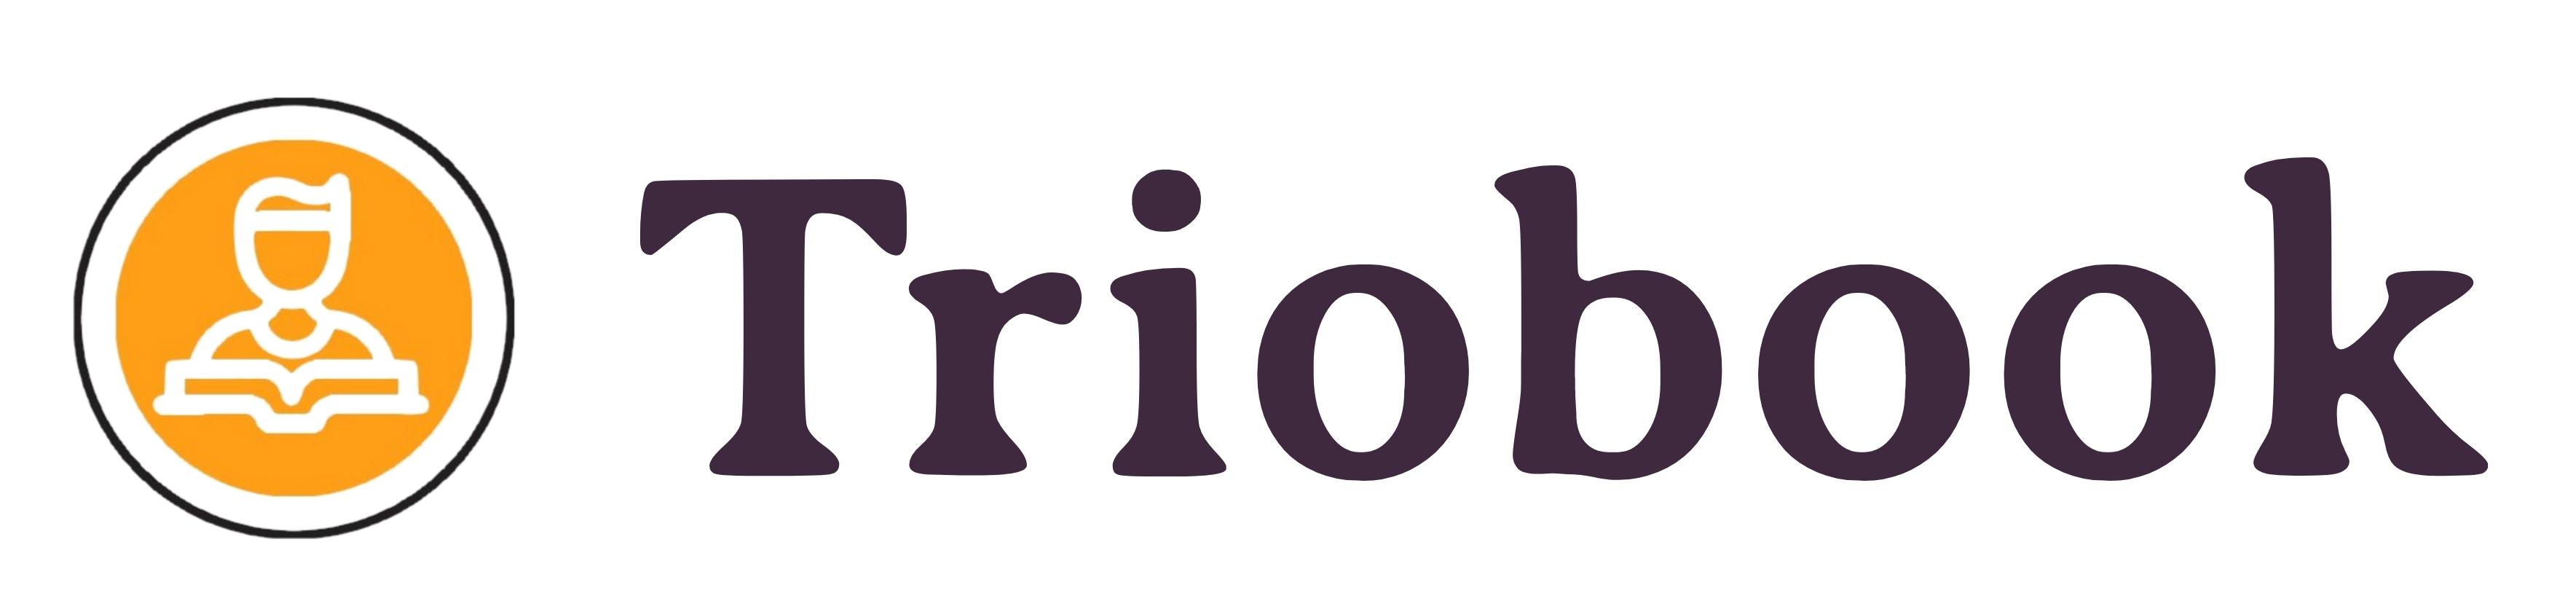 Triobook, Inc